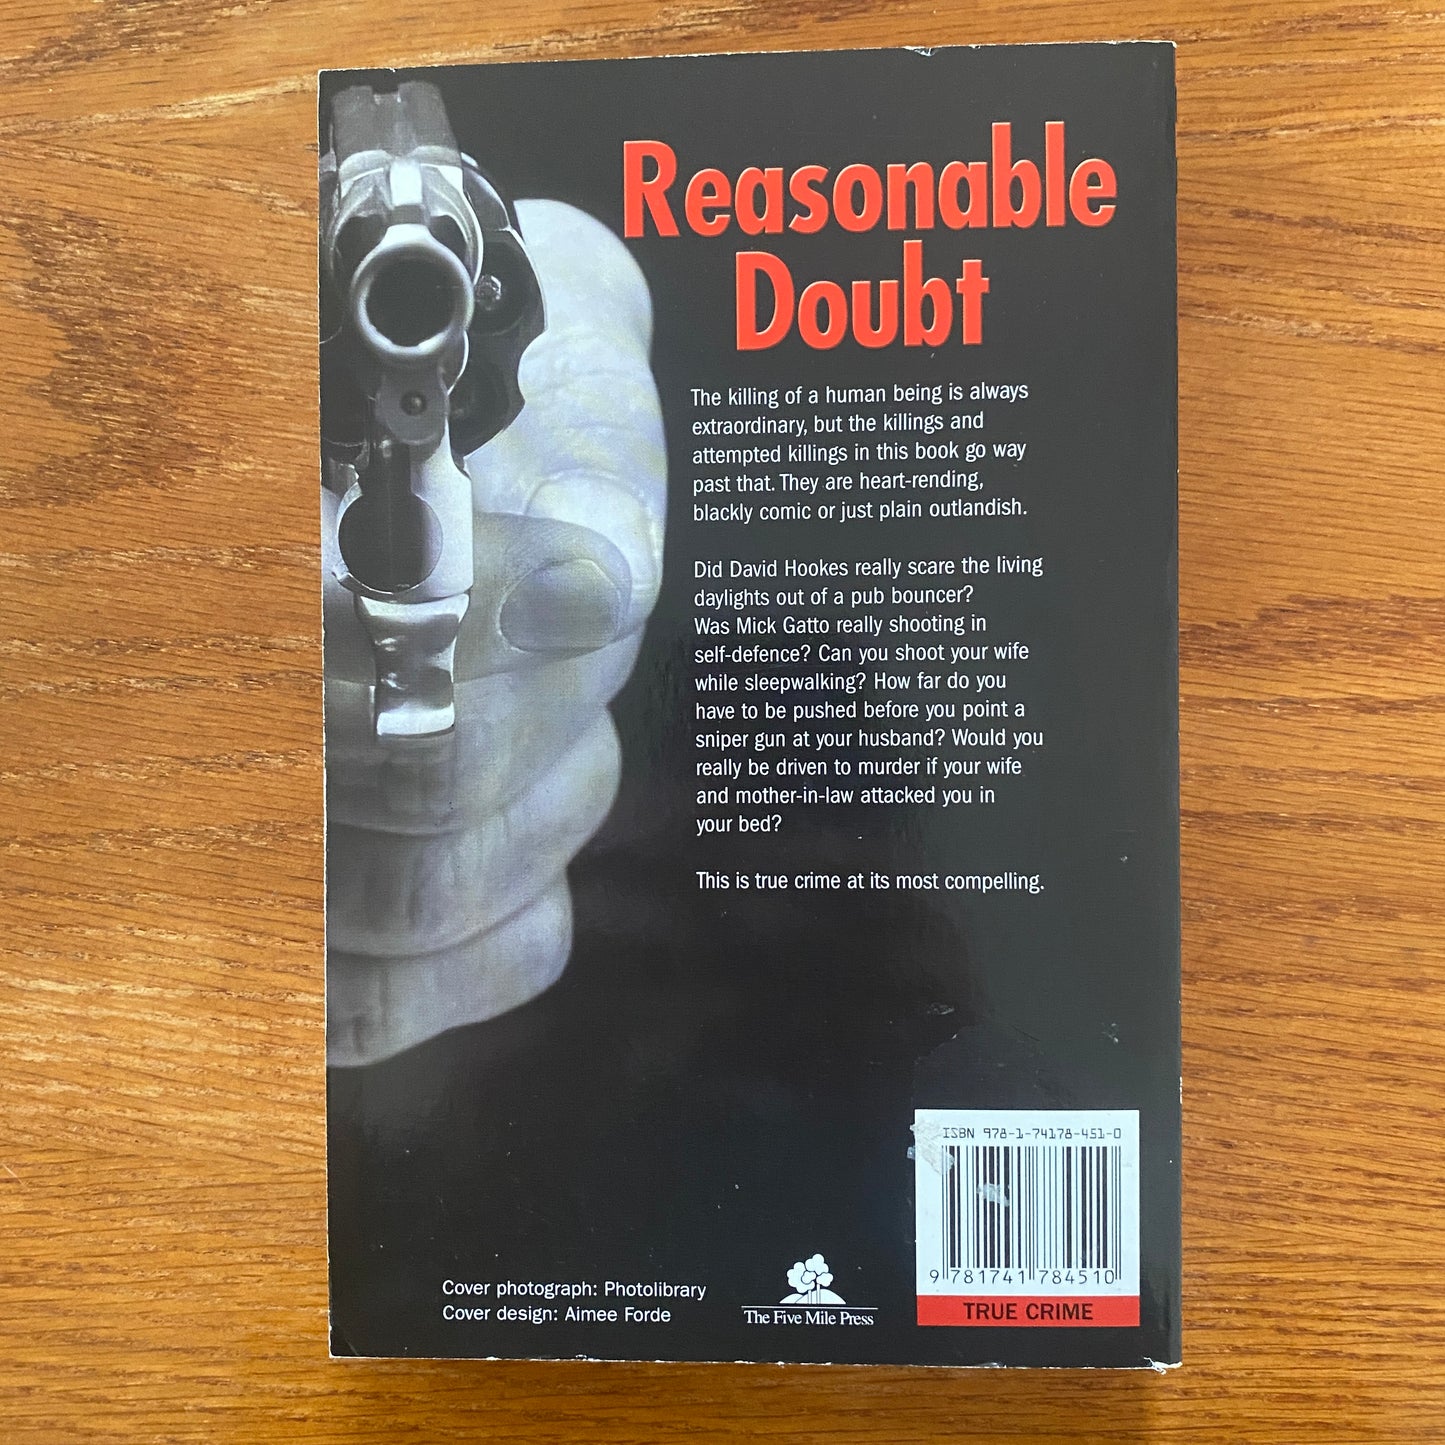 Reasonable Doubt: Bizarre Tales of Death & Justice - Wayne Howell